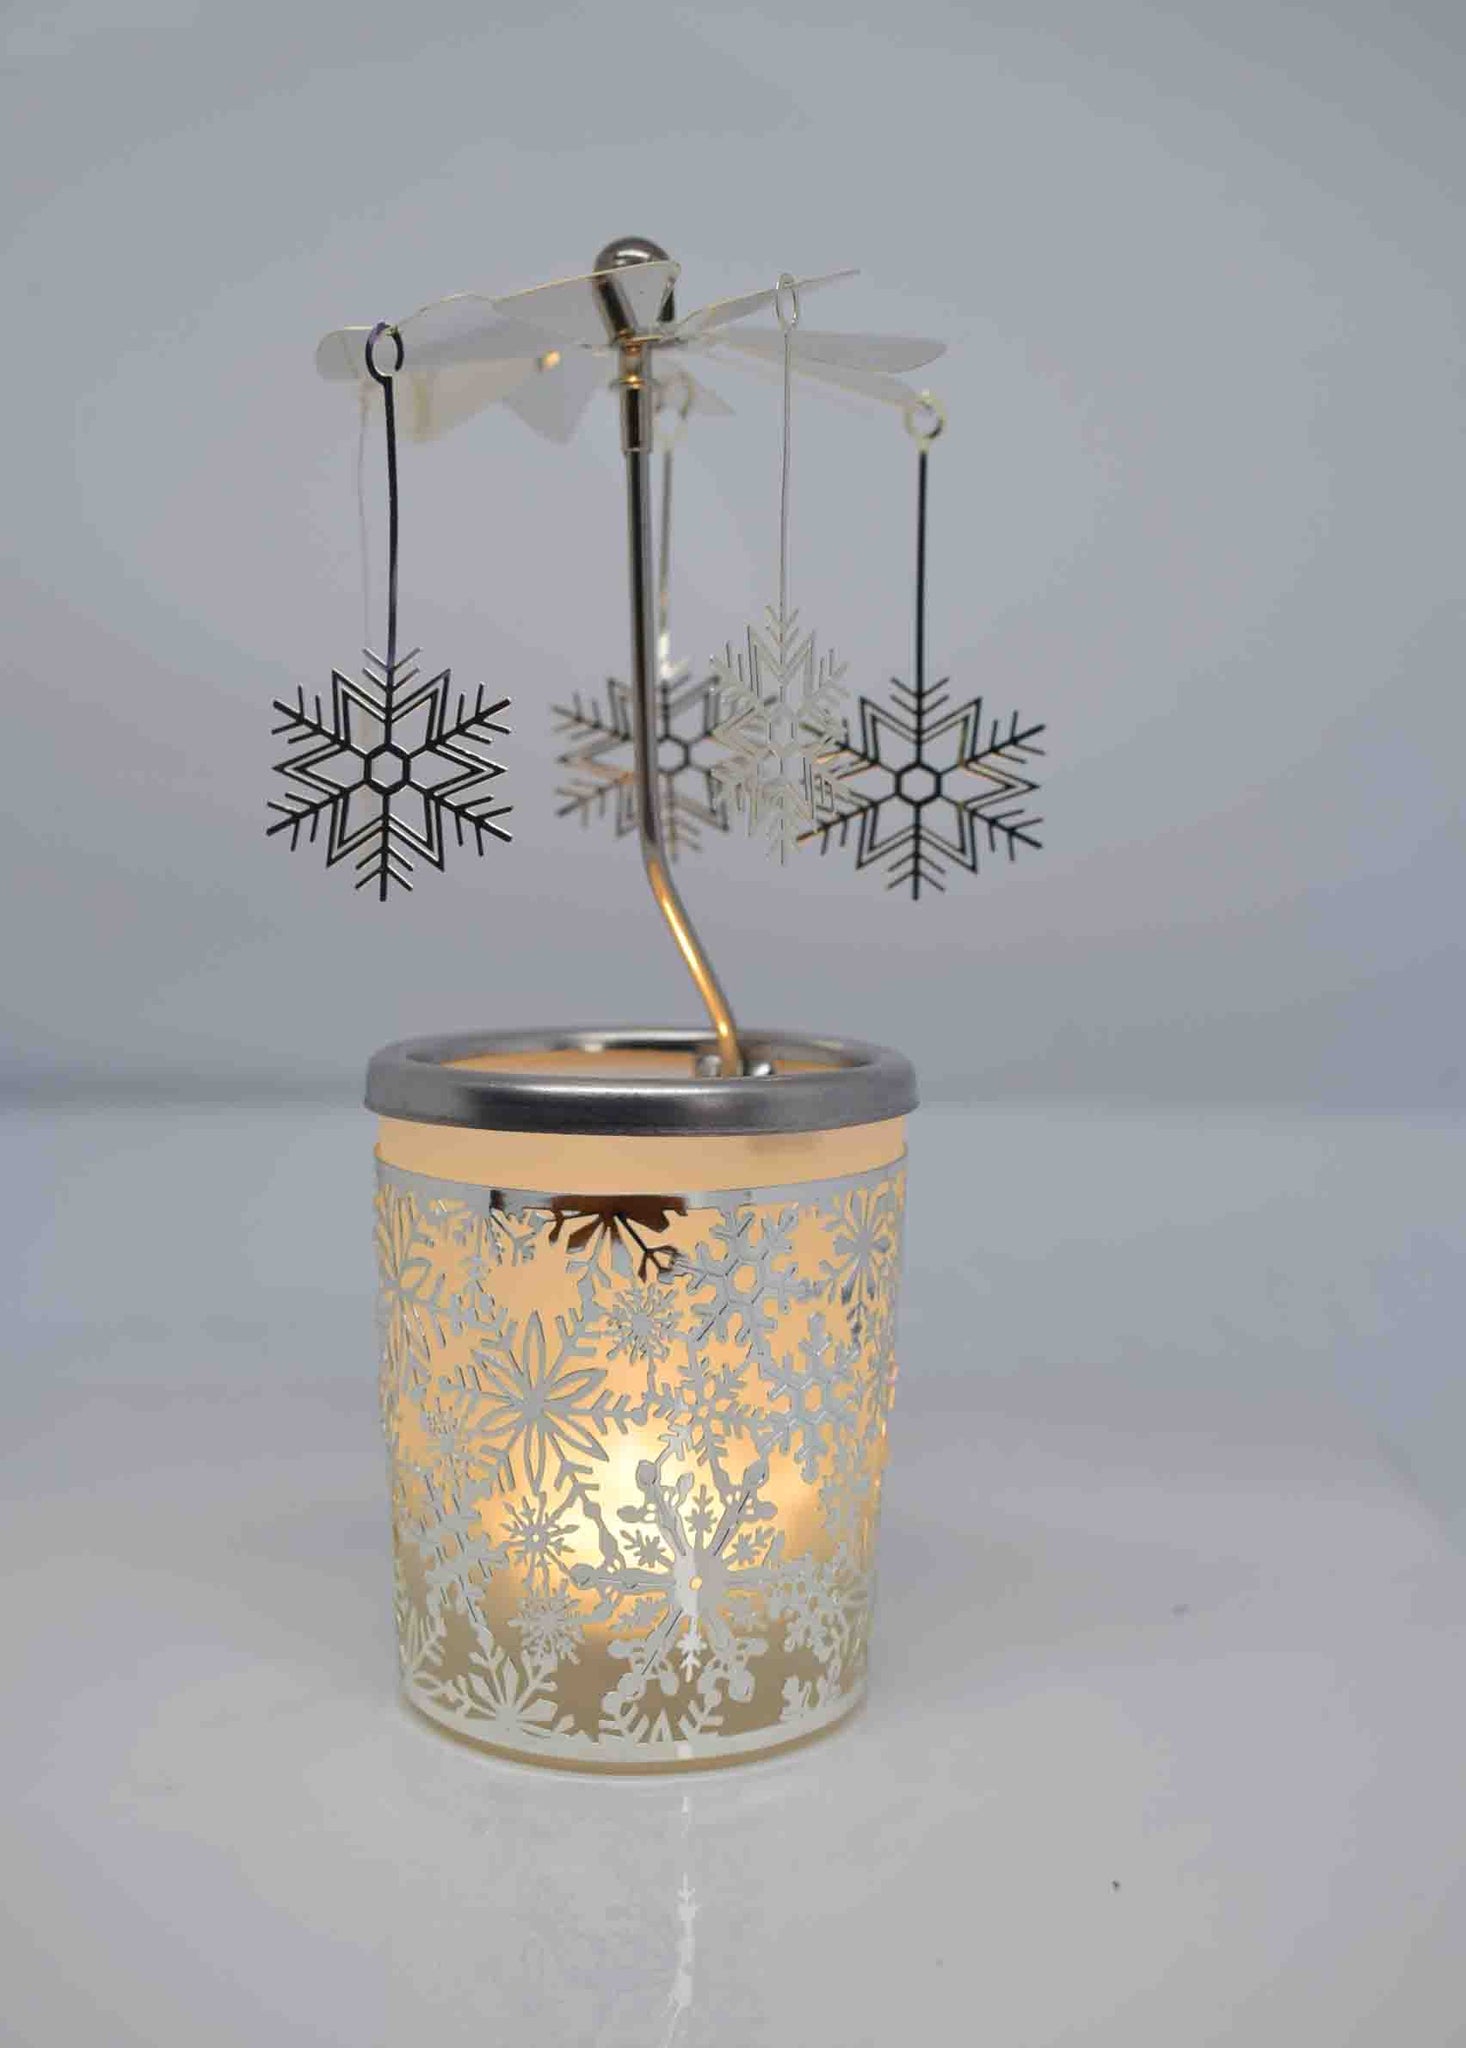 Snowflake Carousel Tea Light Holder - Pixi Daisy